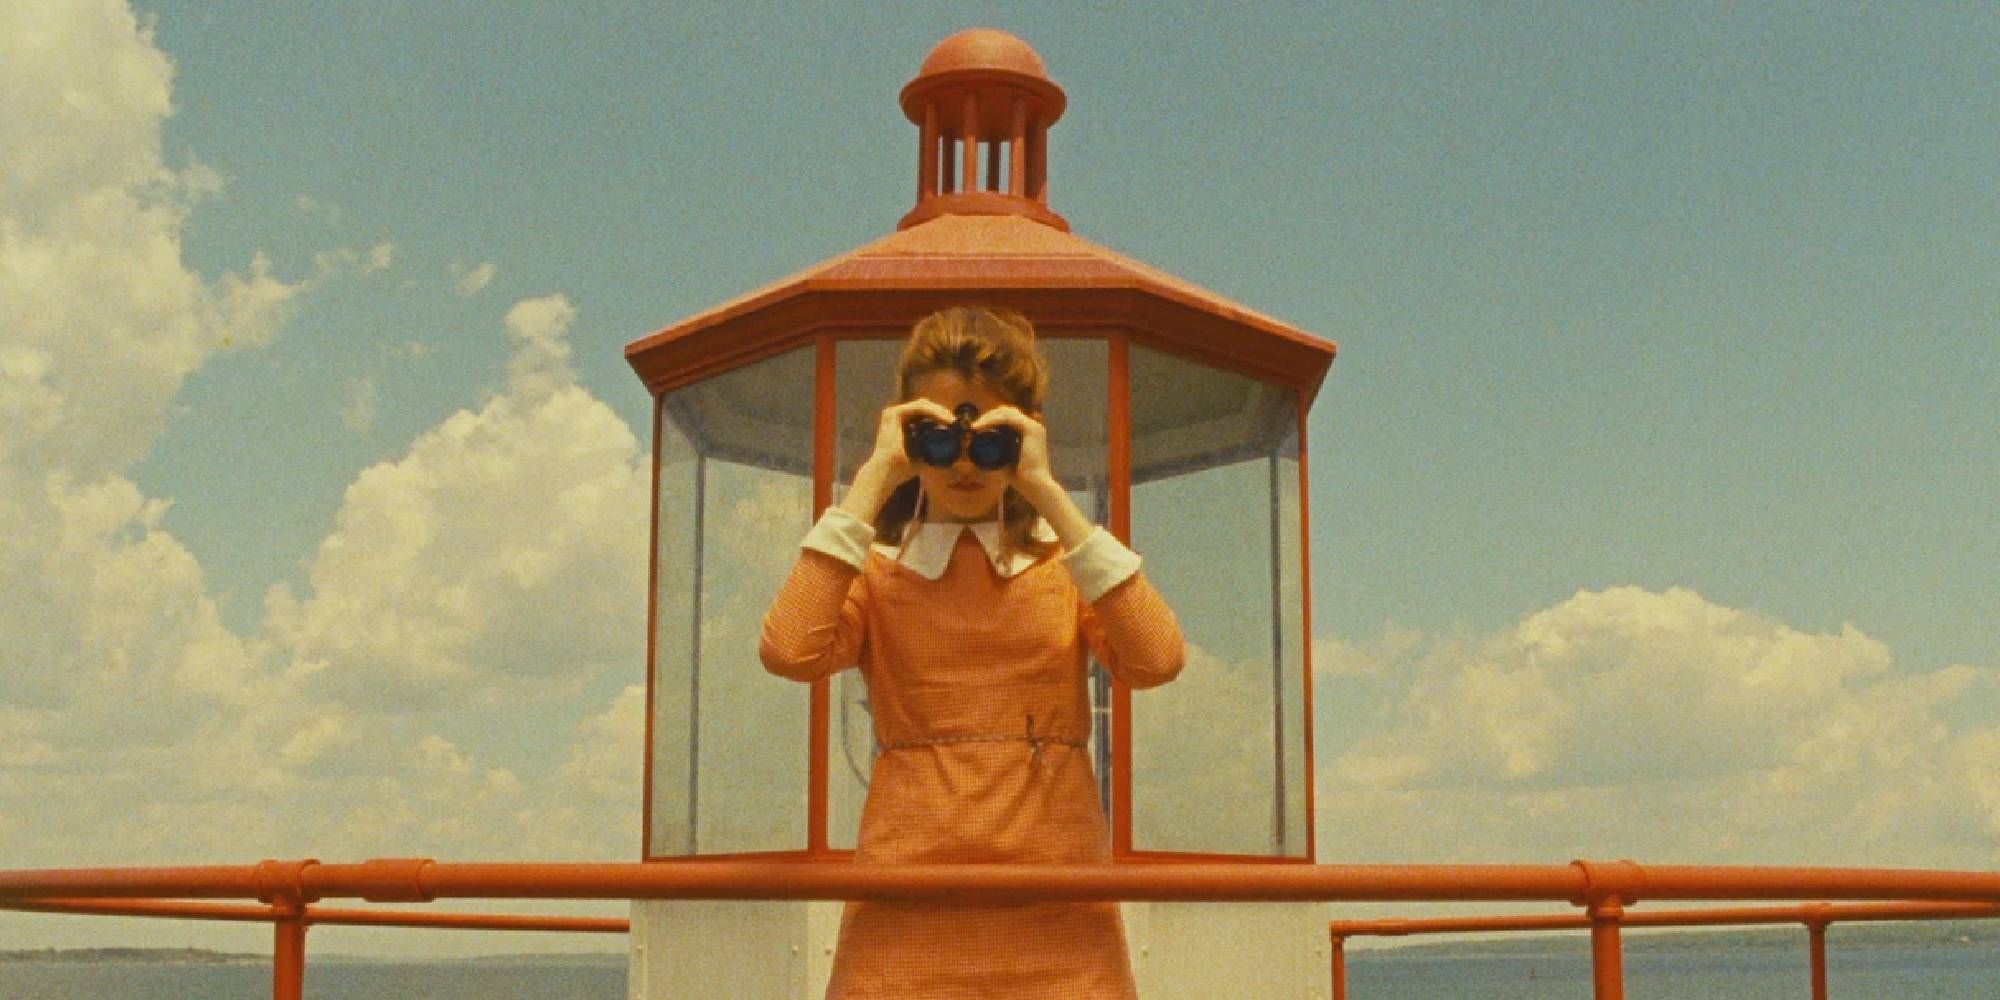 Kara Hayward in Moonrise Kingdom looks out with binoculars.